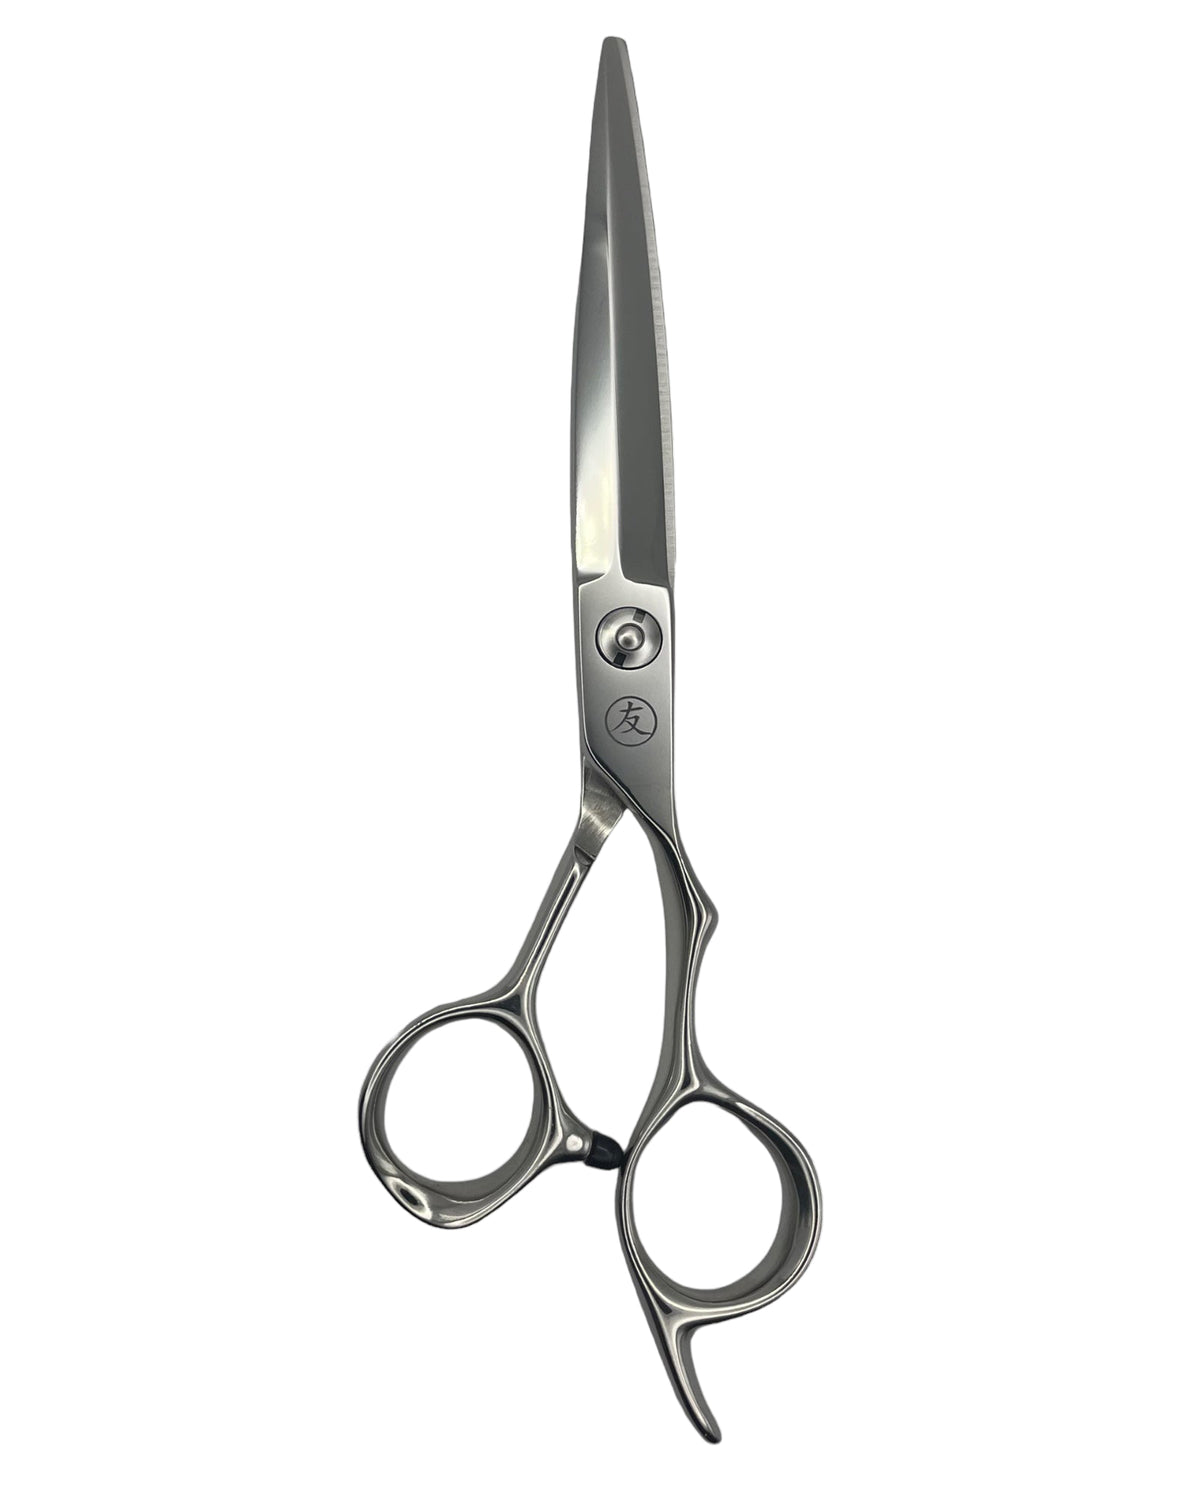 AK Z-1 Master Hairdressing Scissors in 6.5 inch